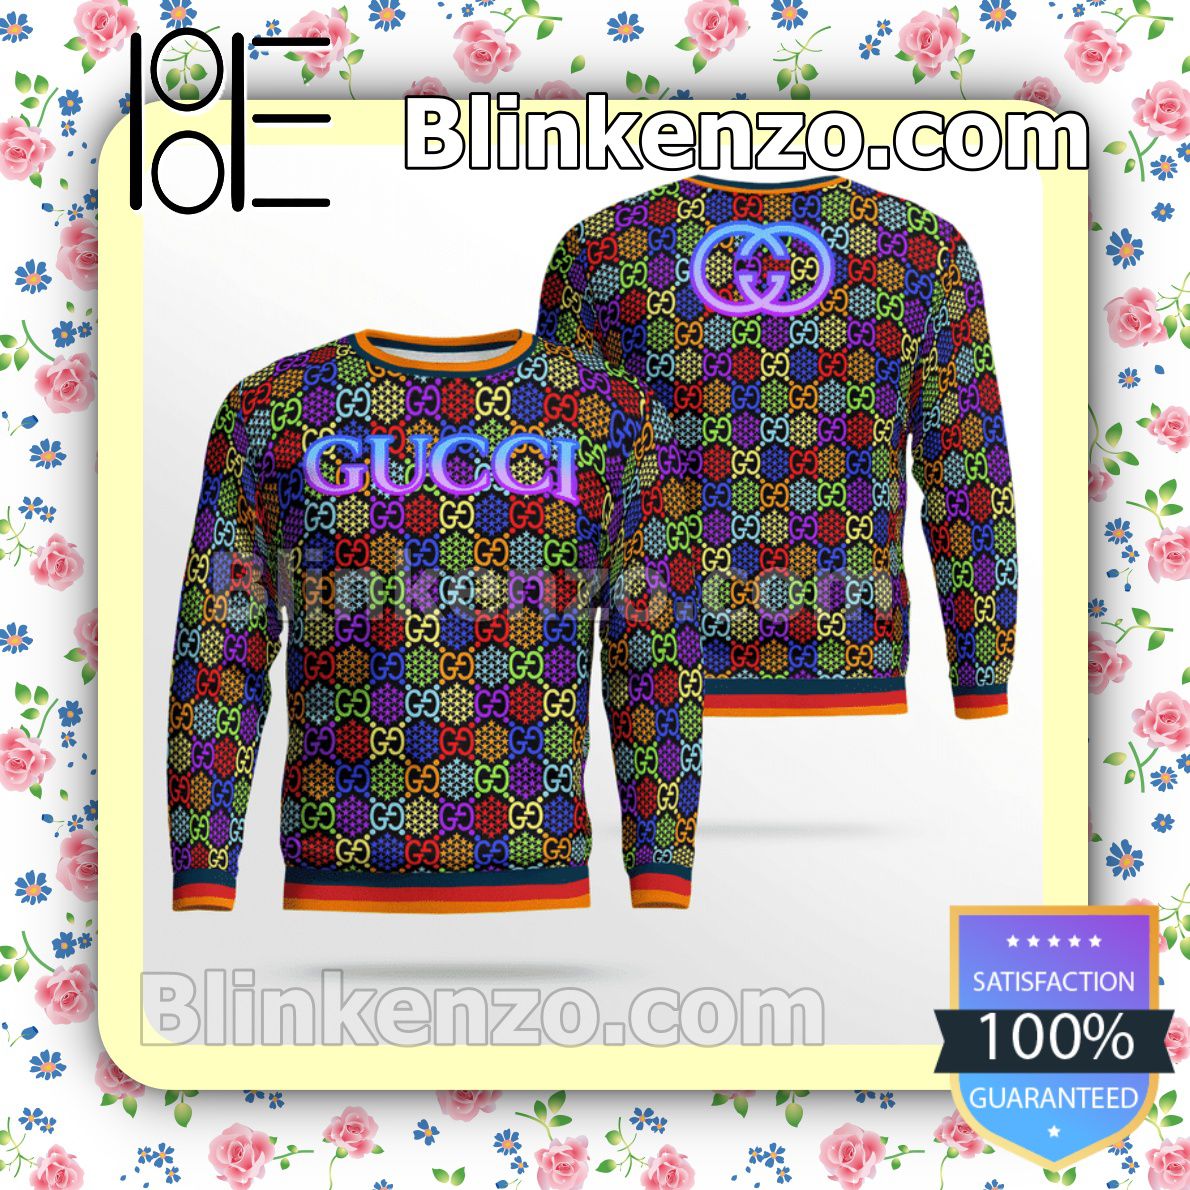 Gucci Psychedelic Multicolor Mens Sweater